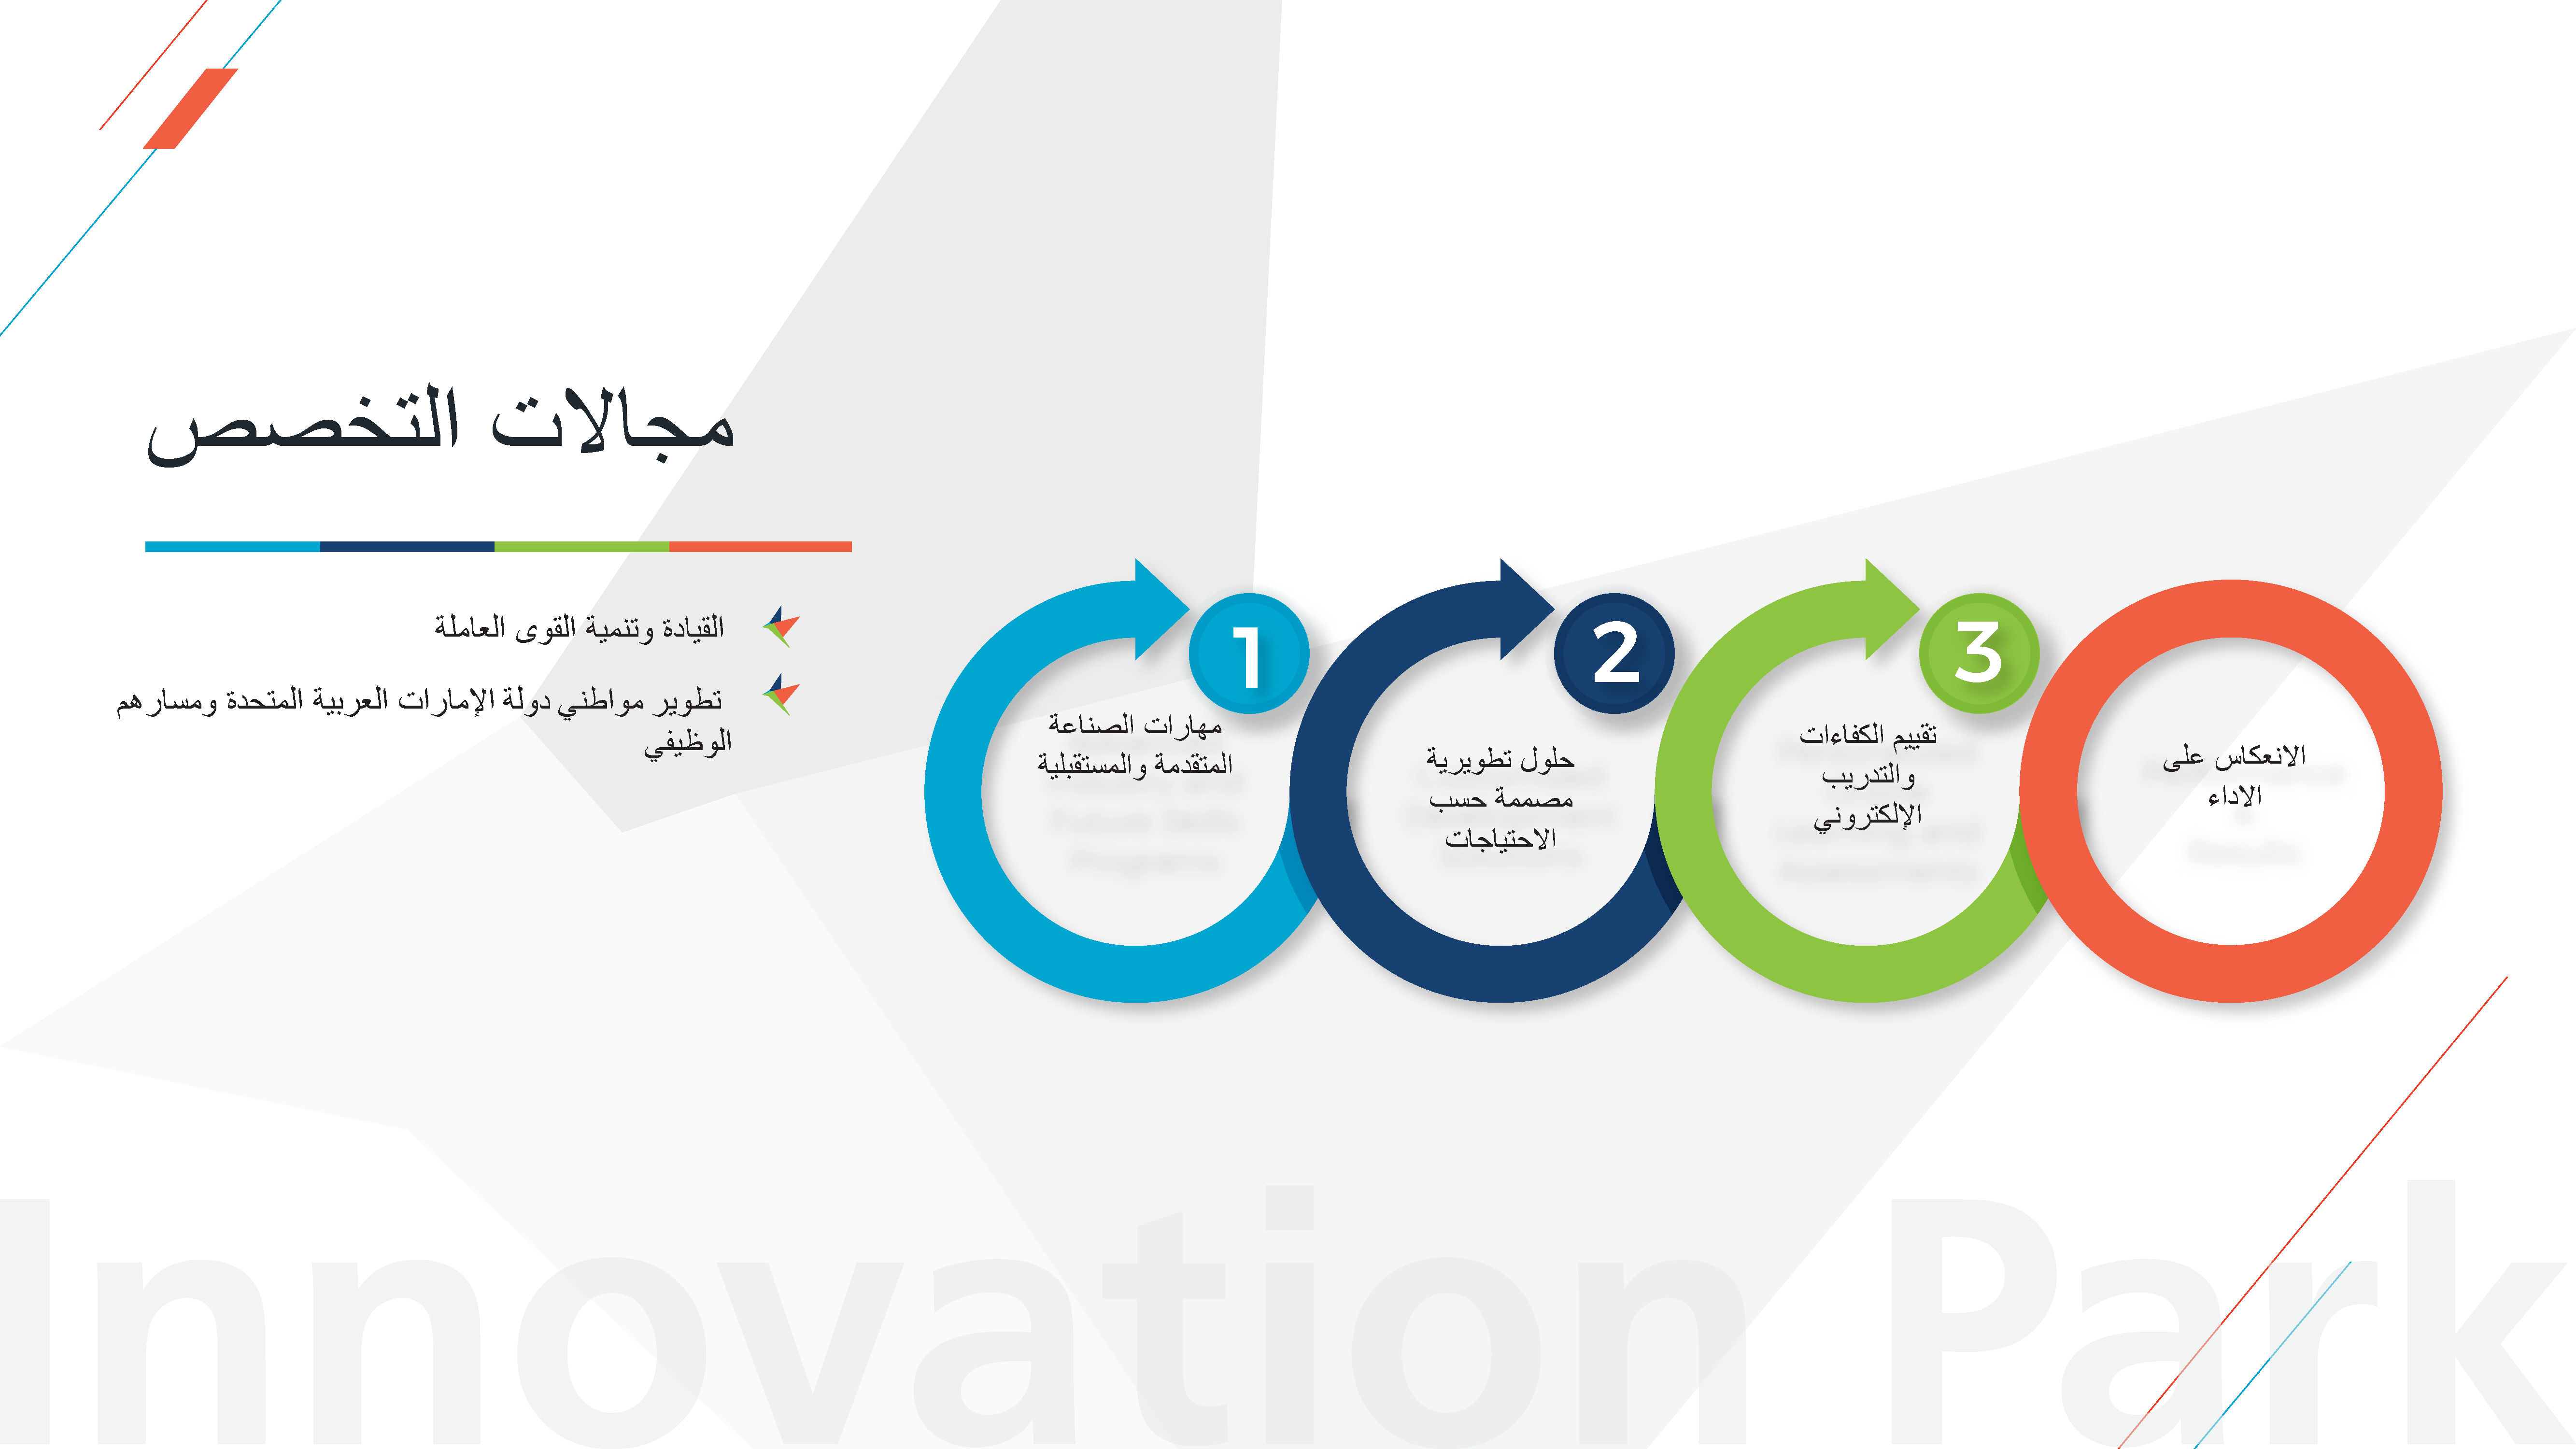 Innovation Park Profile_Part3.png